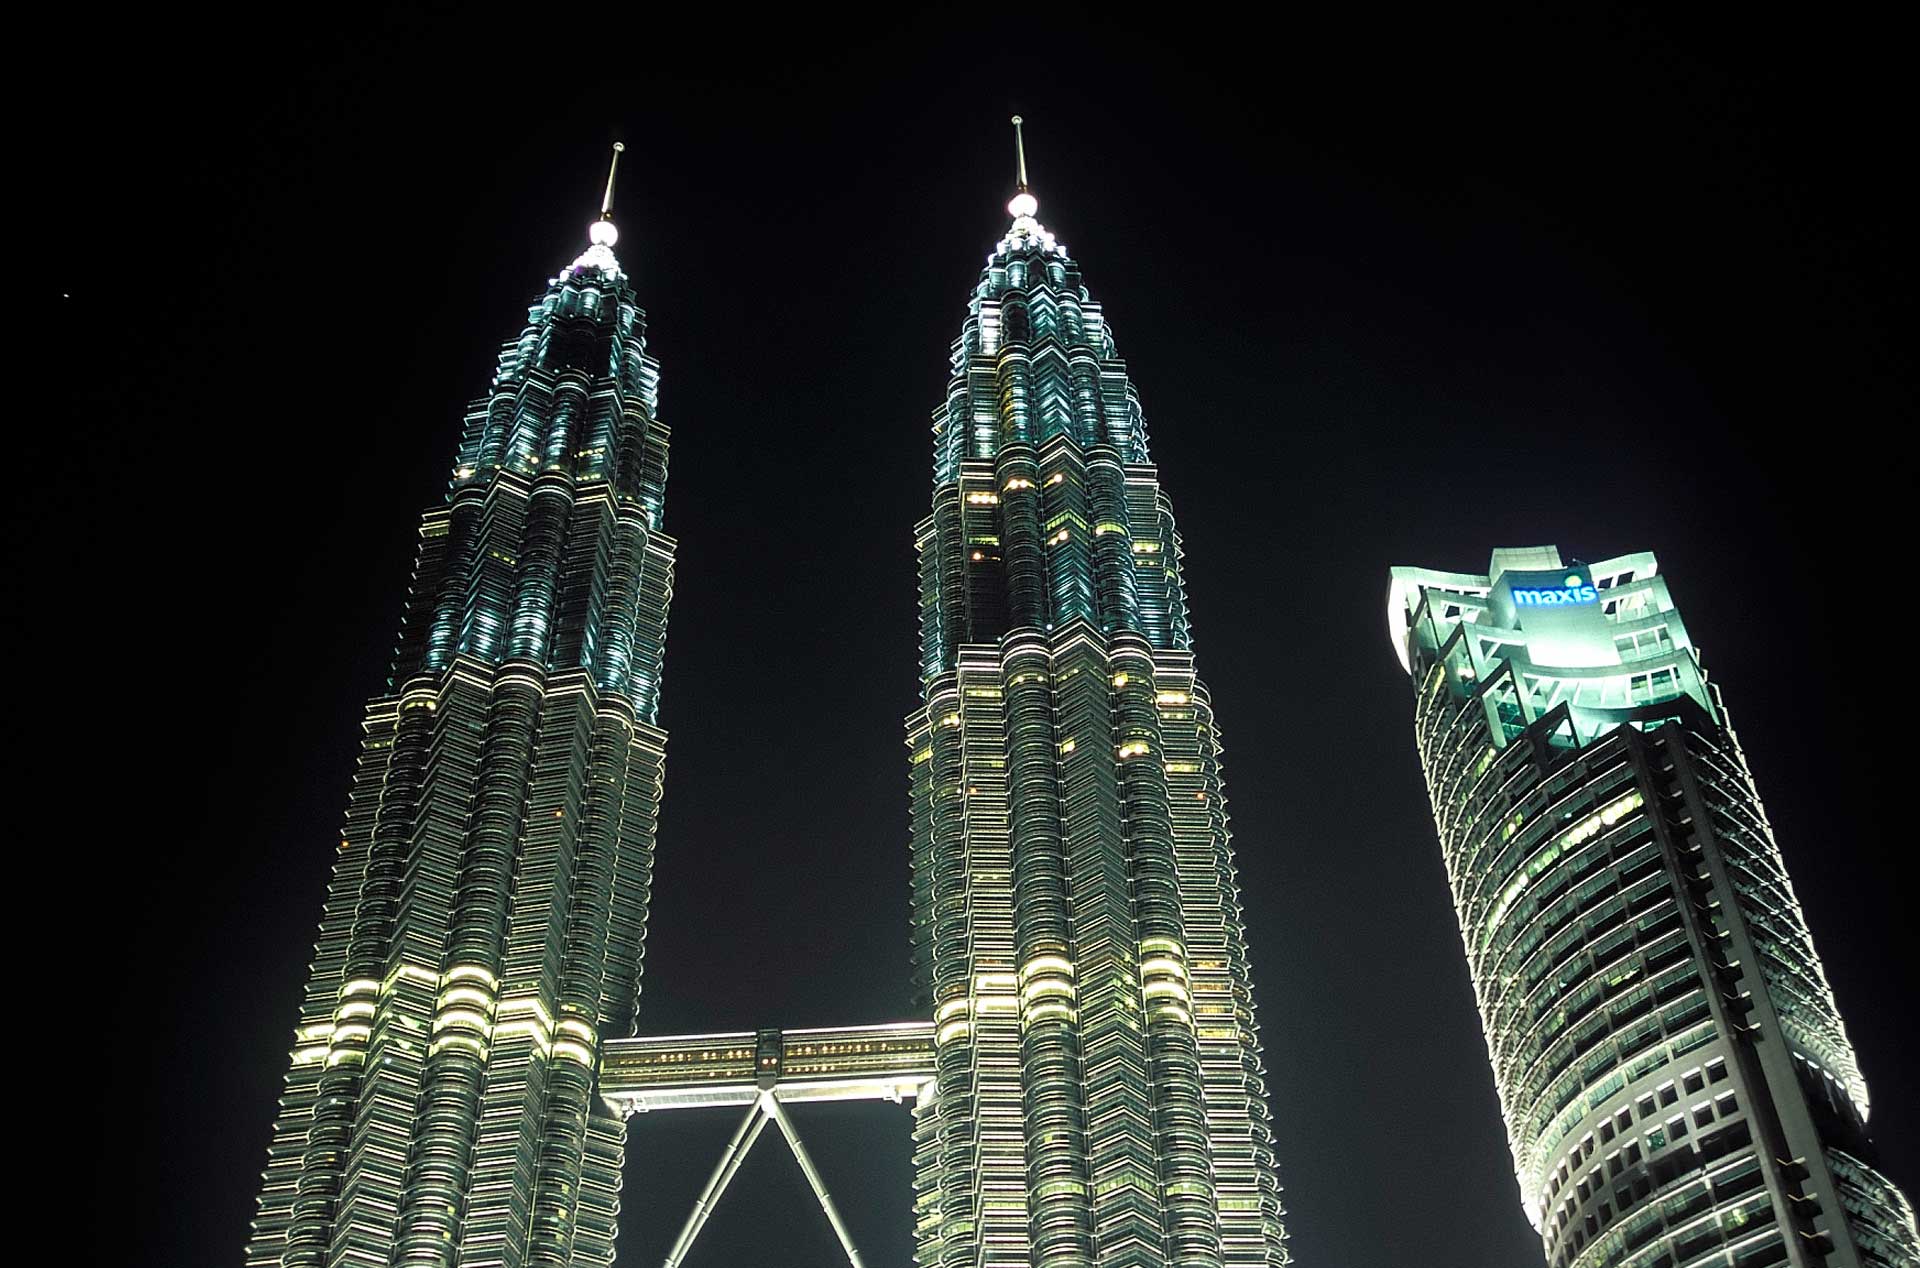 Petronas Towers at night, Kuala Lumpur, Malaysia